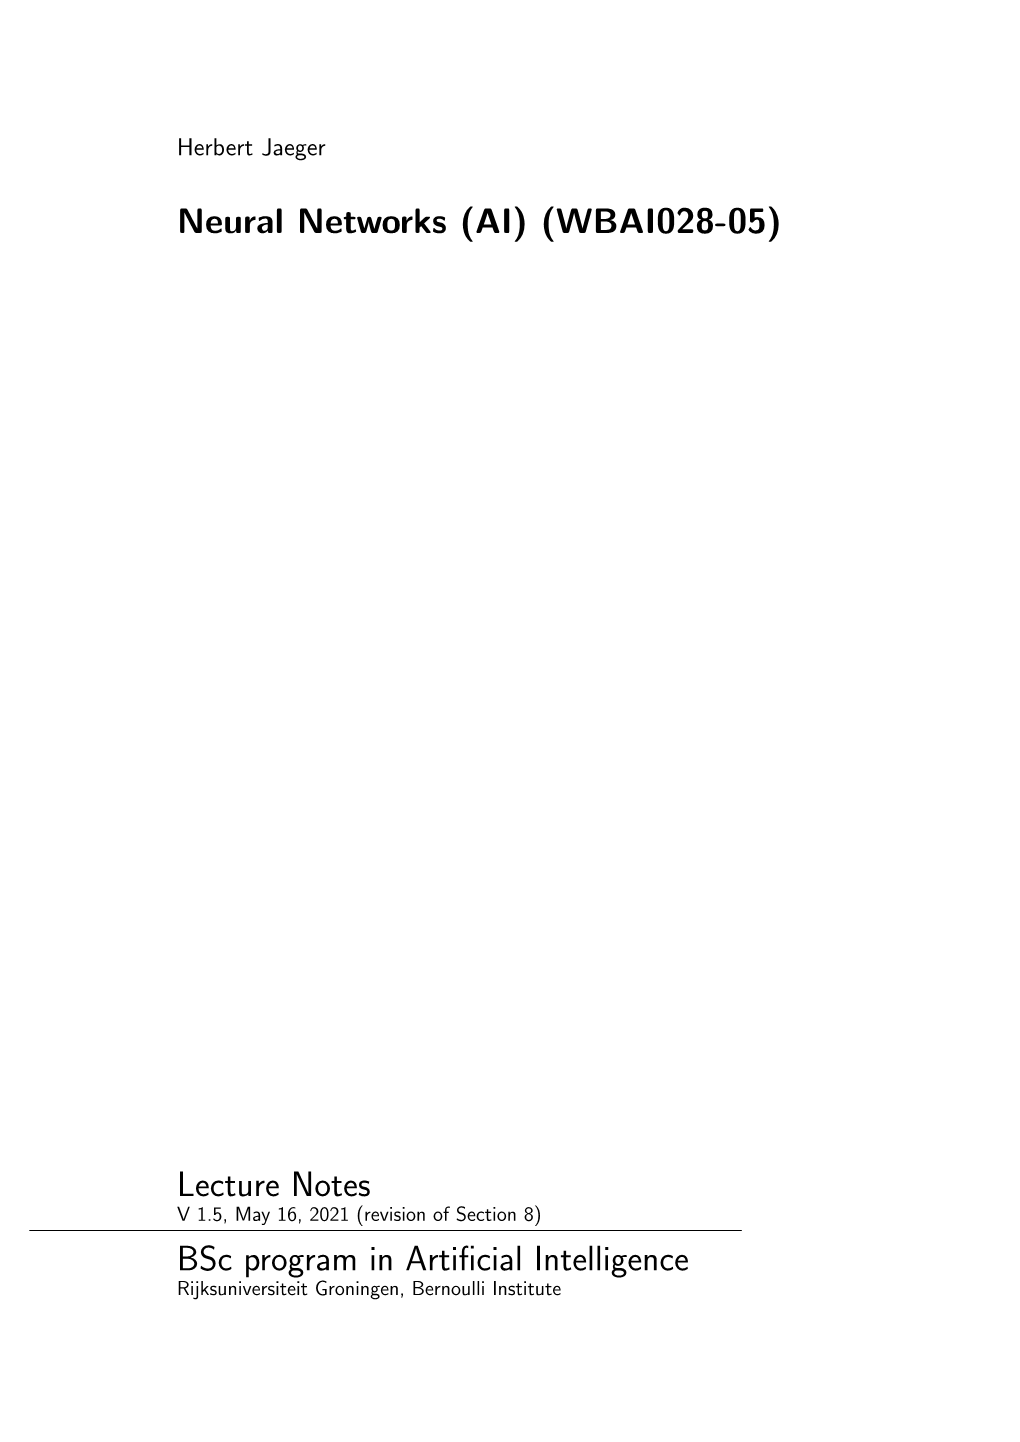 Neural Networks (AI) (WBAI028-05) Lecture Notes